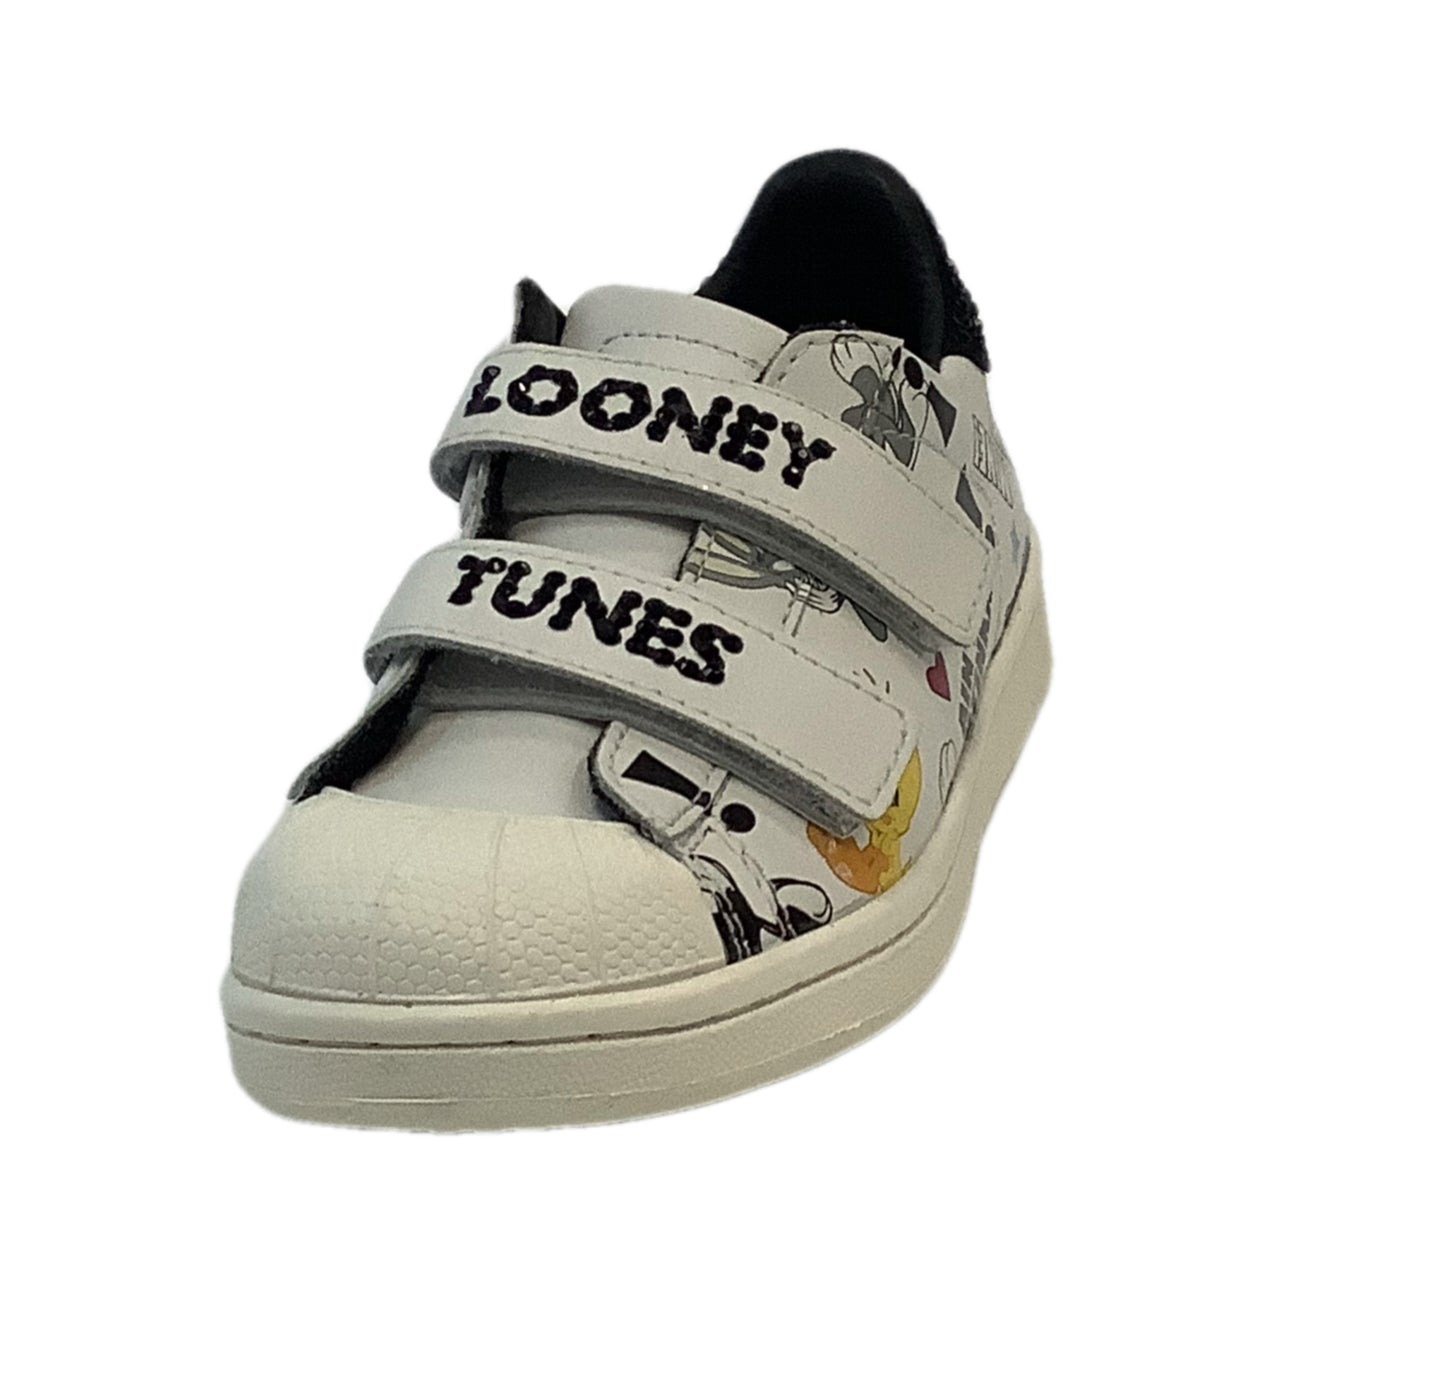 Disney Moa Concept Boys Braker Looney Tunes sneakers